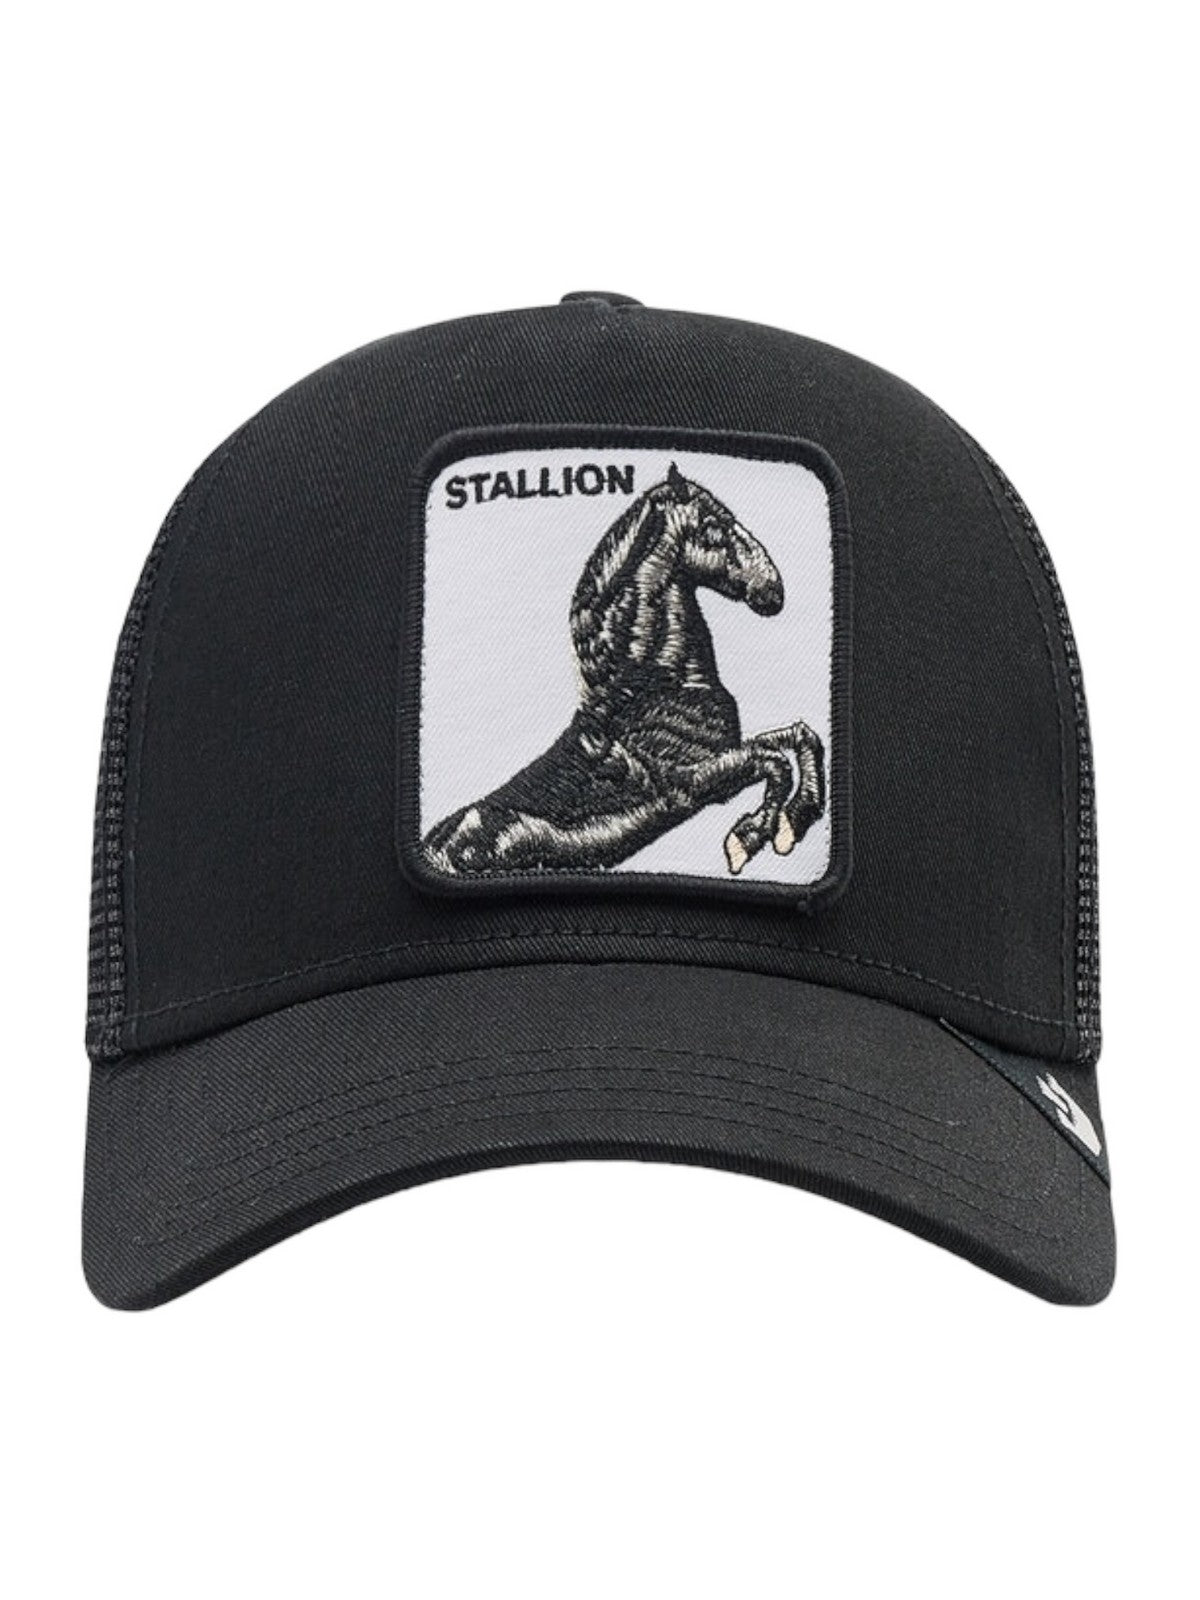 GOORIN BROS Chapeau homme The stallion 101-0393-BLK Noir